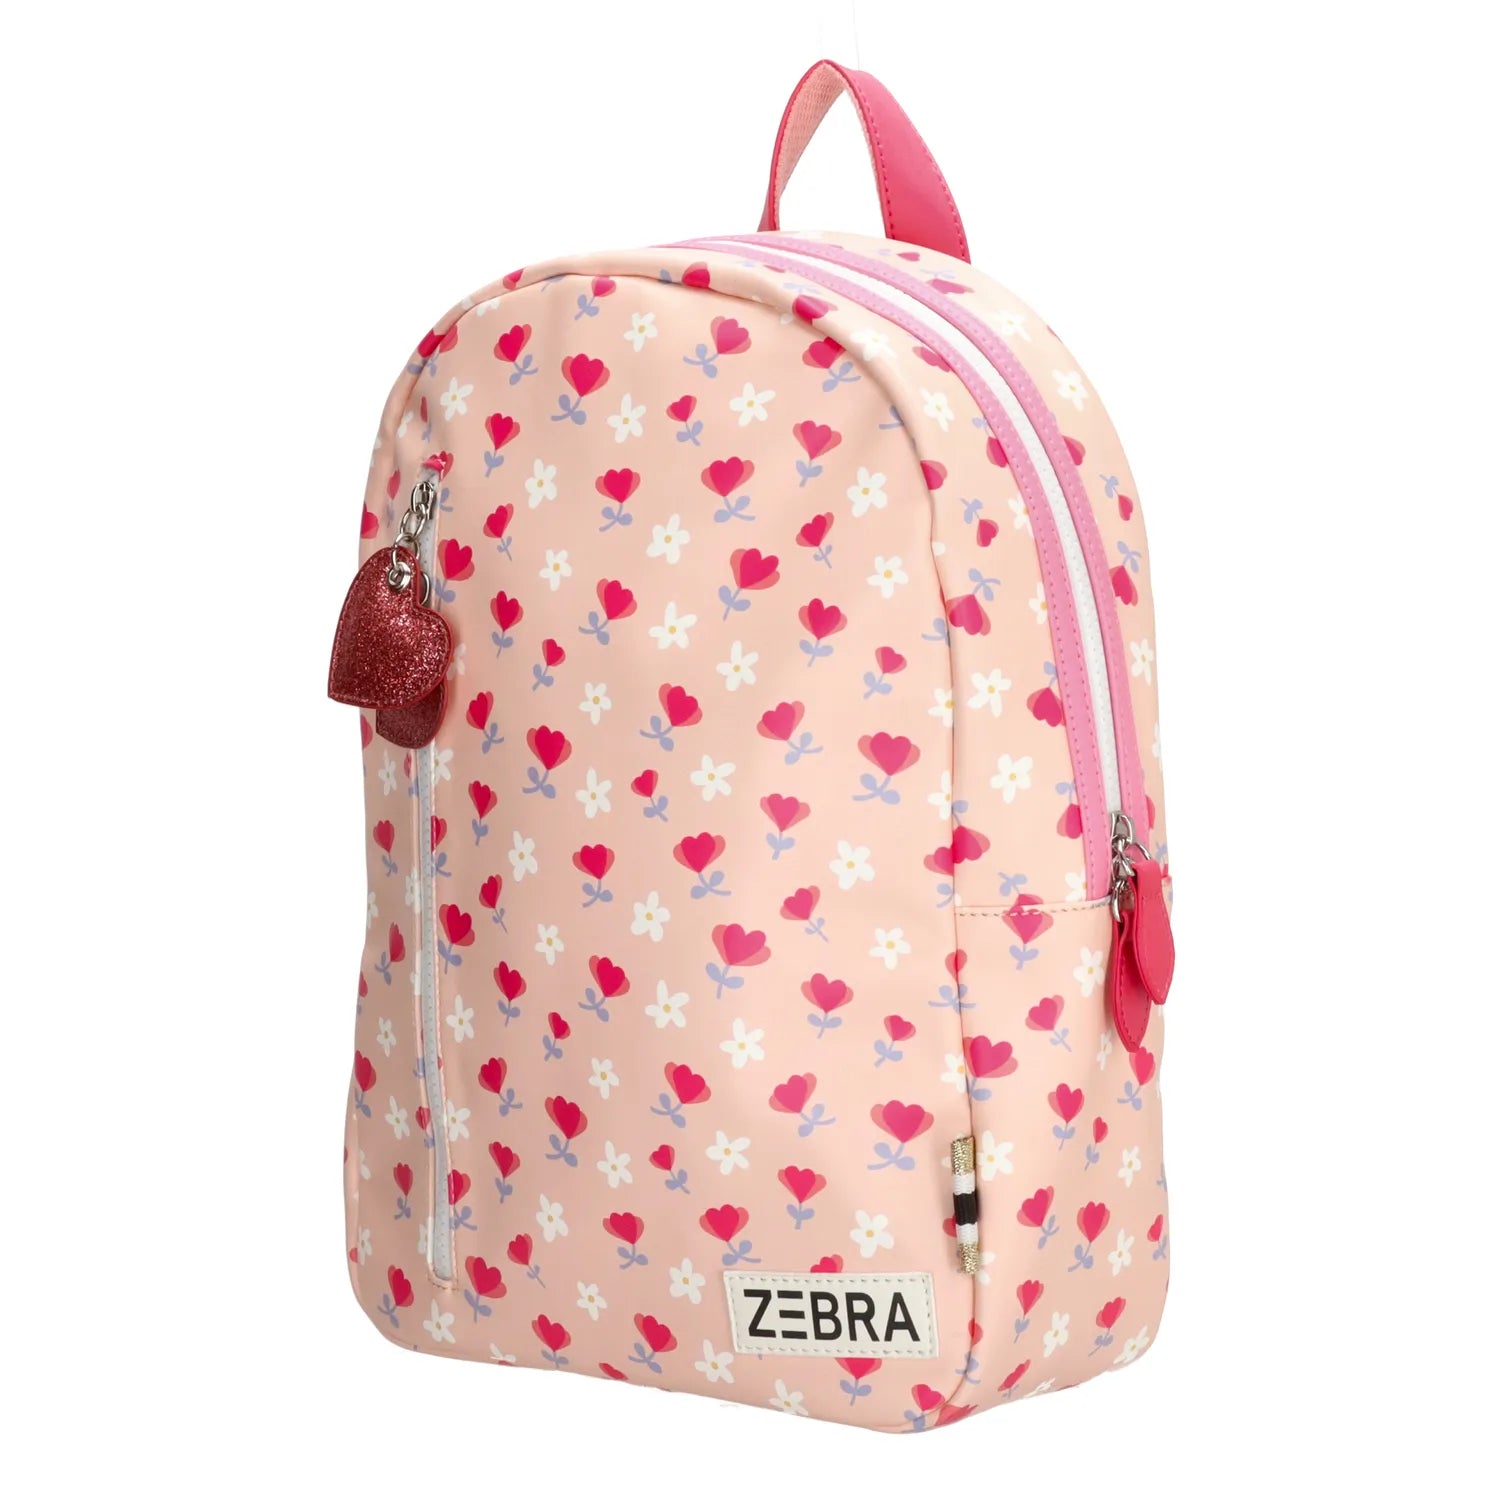 Zebra Backpack (M) - Girls Hearts Daisy - Pink